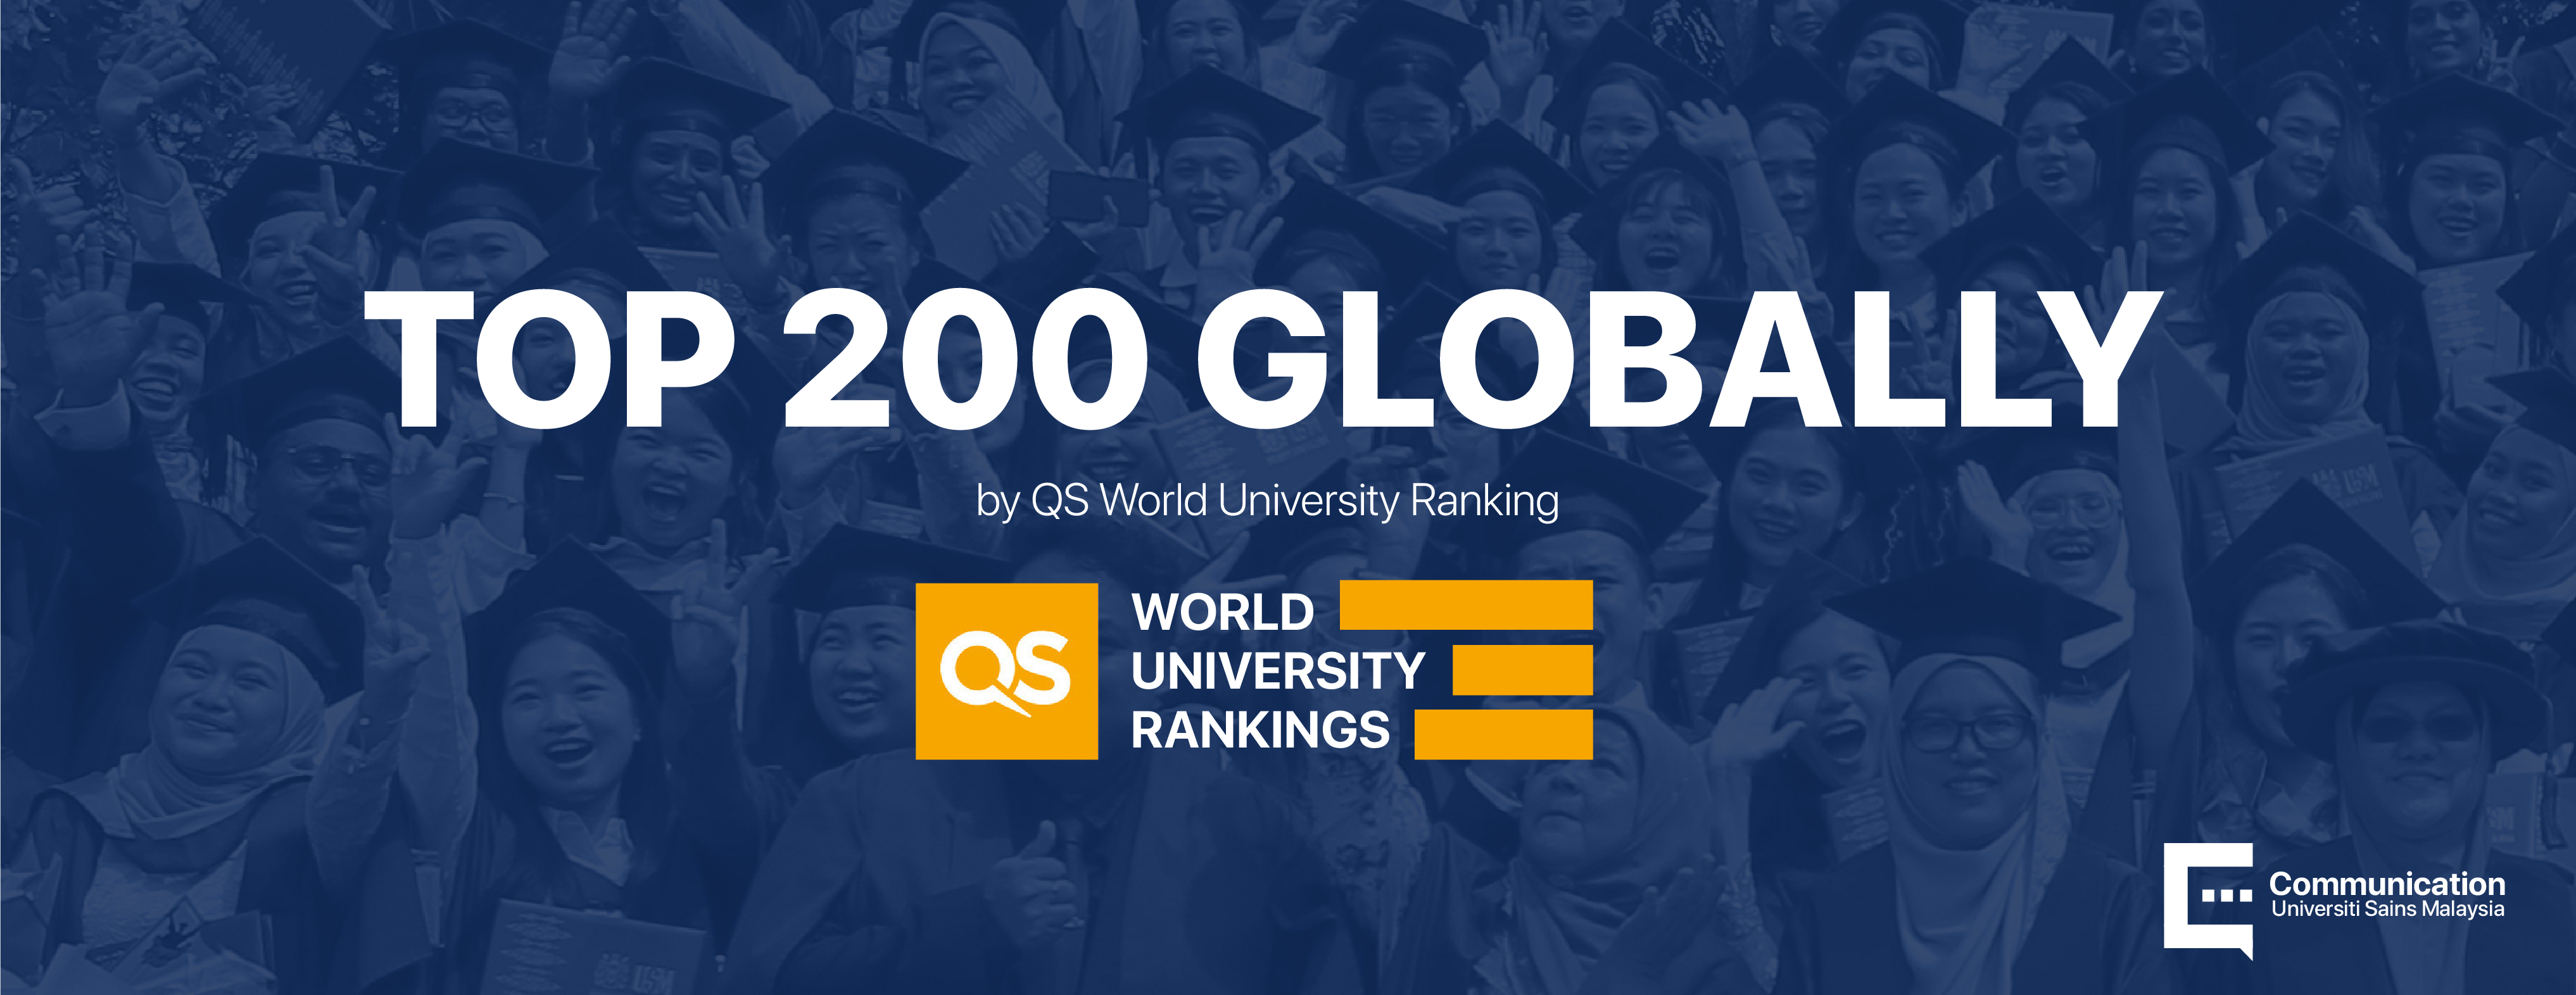 TOP 200 GLOBALLY